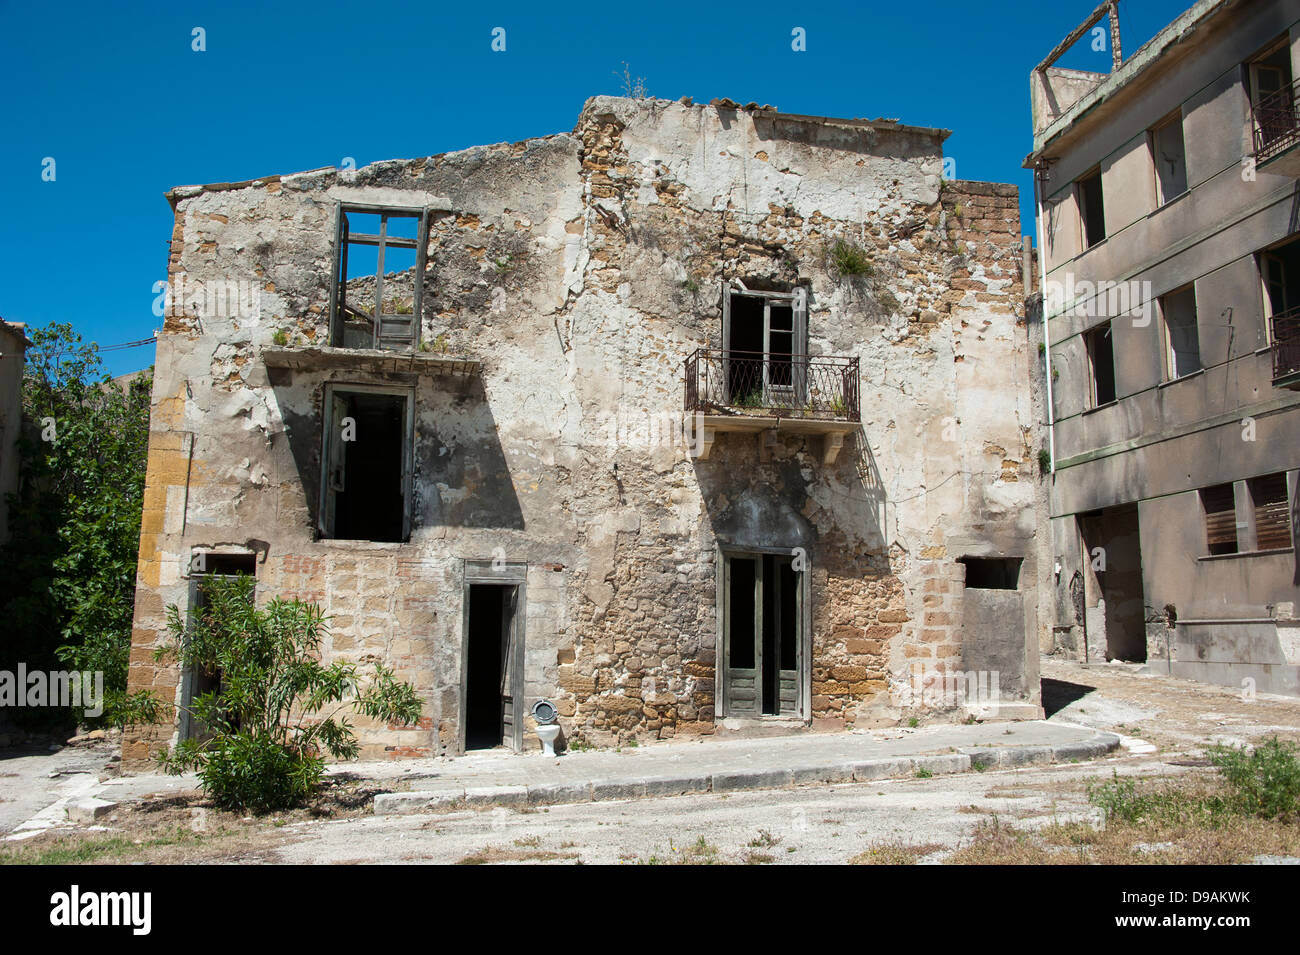 Ruins Poggioreale Province Trapani Sicily Italy Ruinen Poggioreale Provinz Trapani Sizilien Italien Erdbeben zerstoert Katastrop Stock Photo